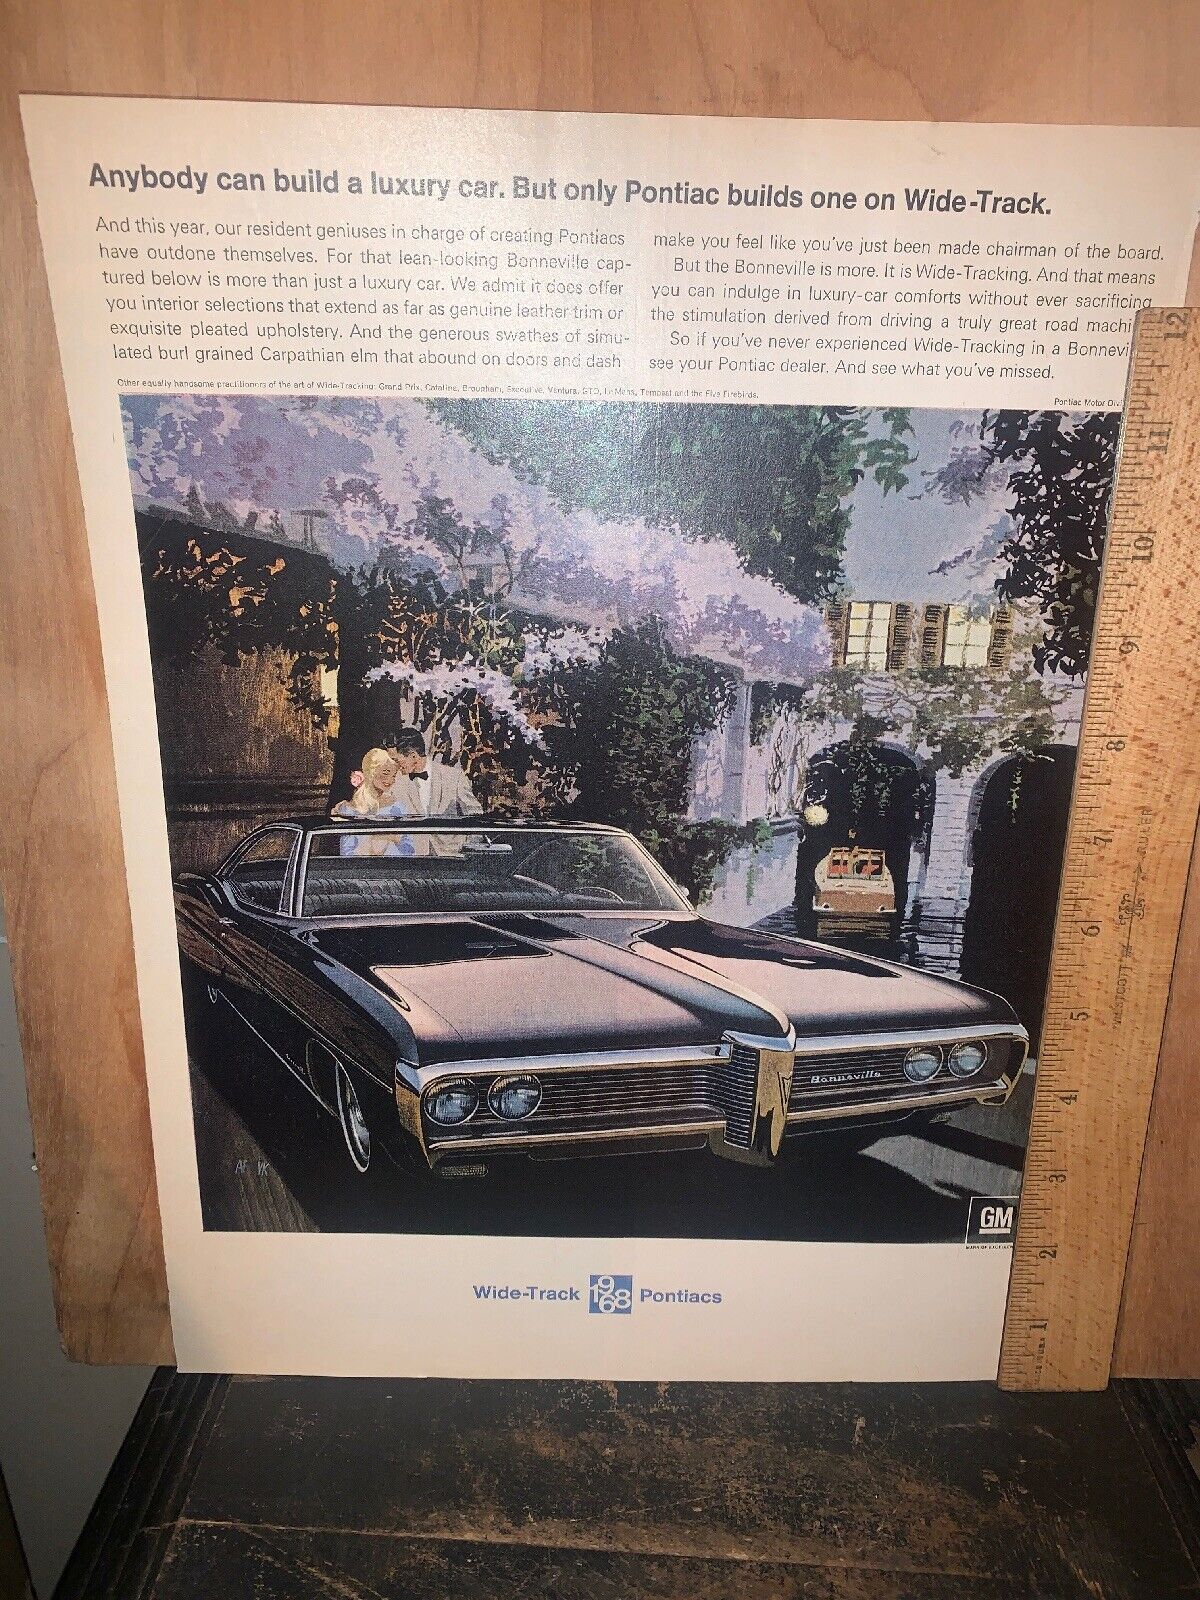 1968 Pontiac Bonneville Print Ad 10 X 13” Approx. 1968 GM Wide Track.